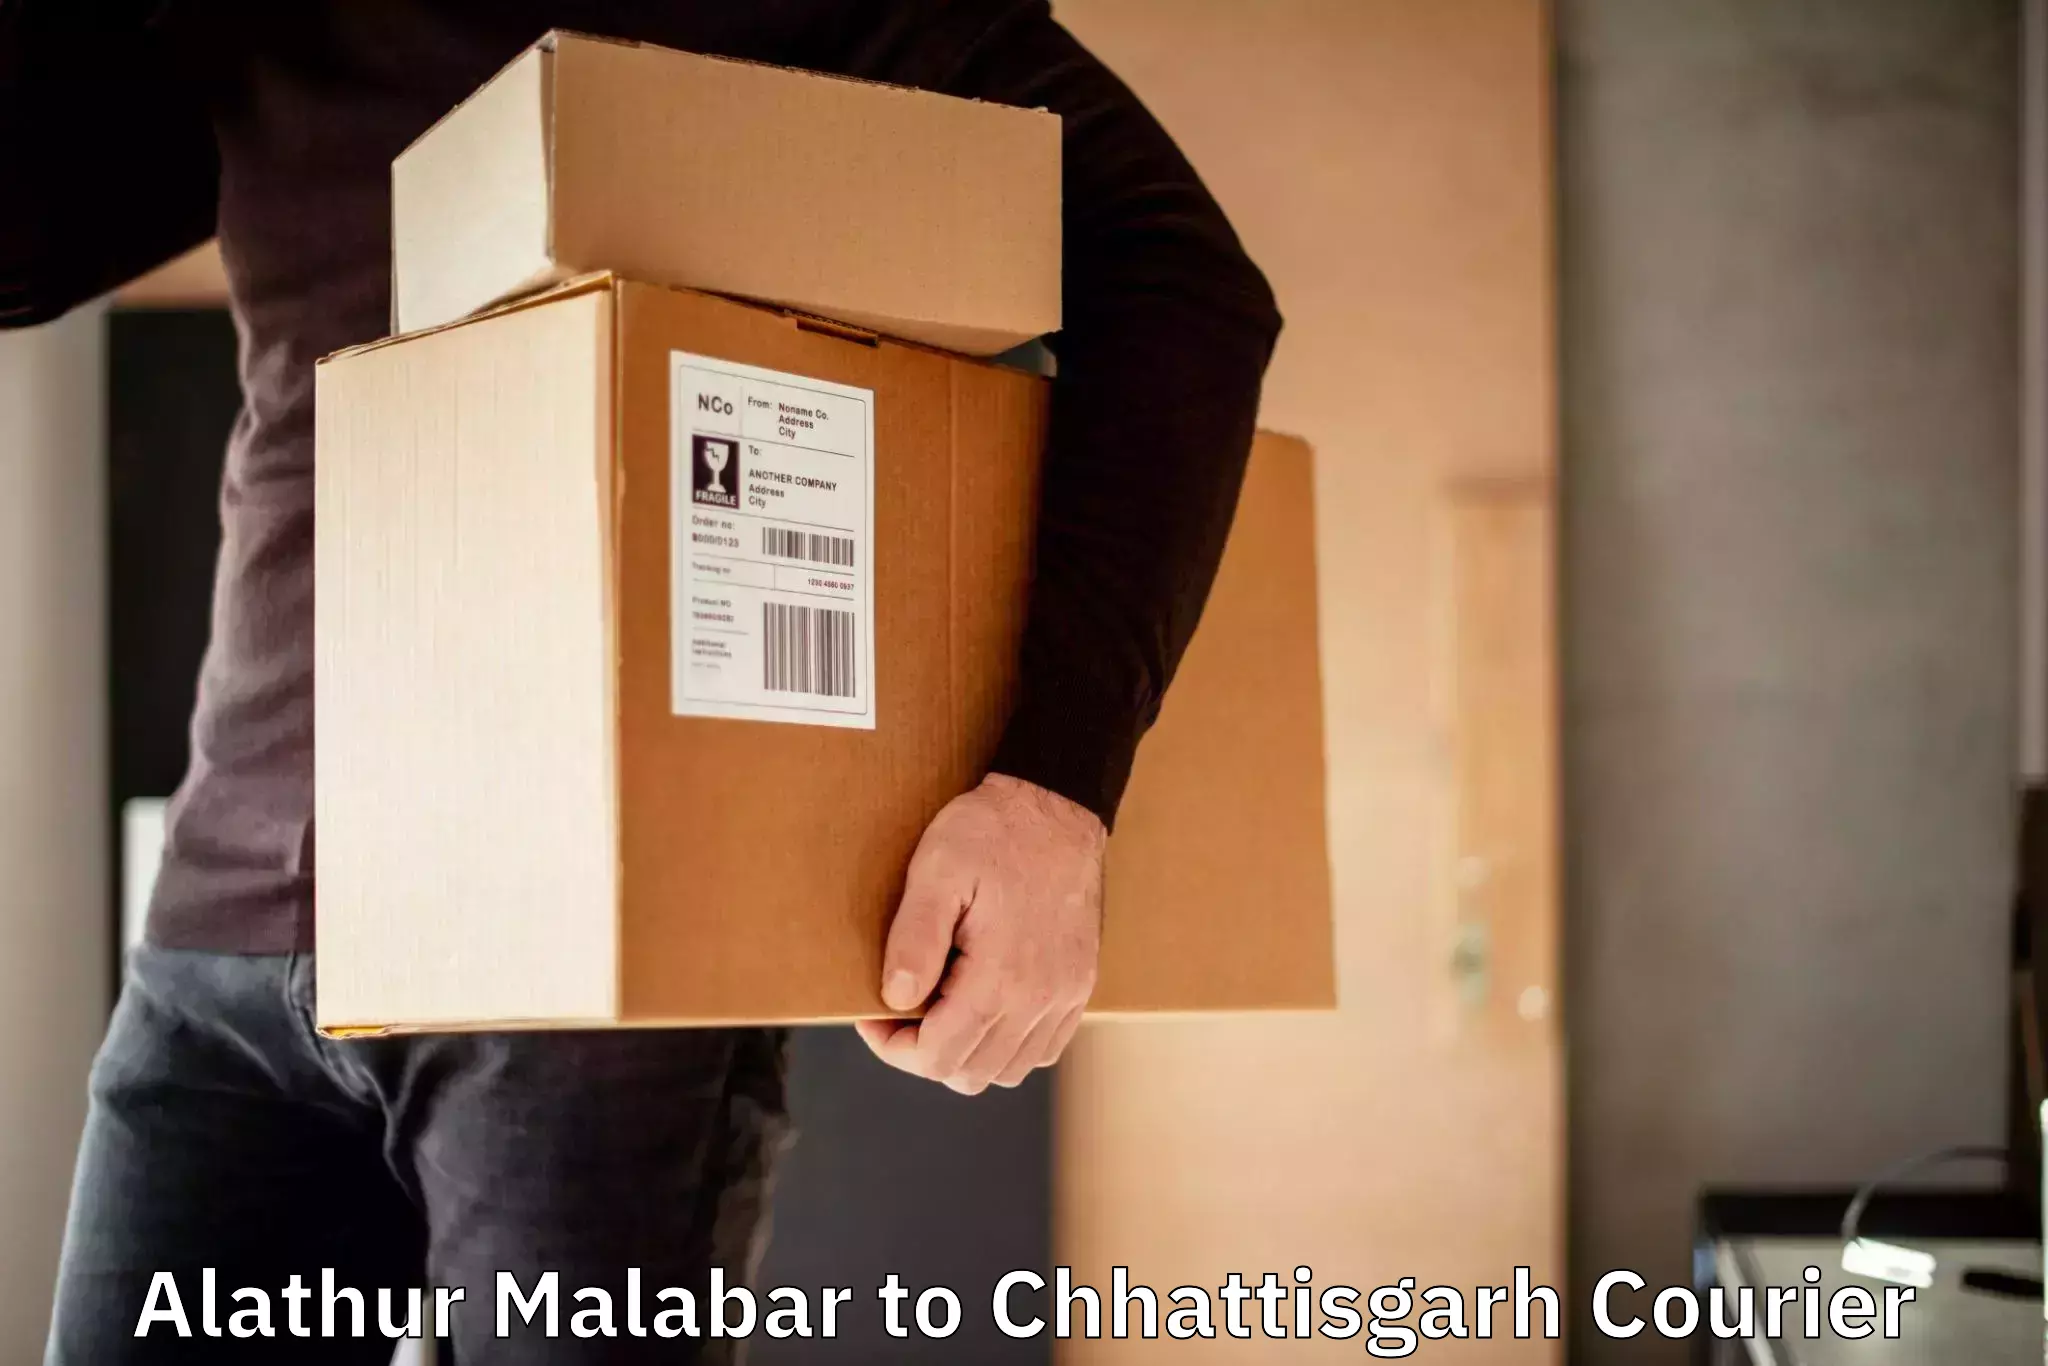 Courier service comparison Alathur Malabar to Chhattisgarh